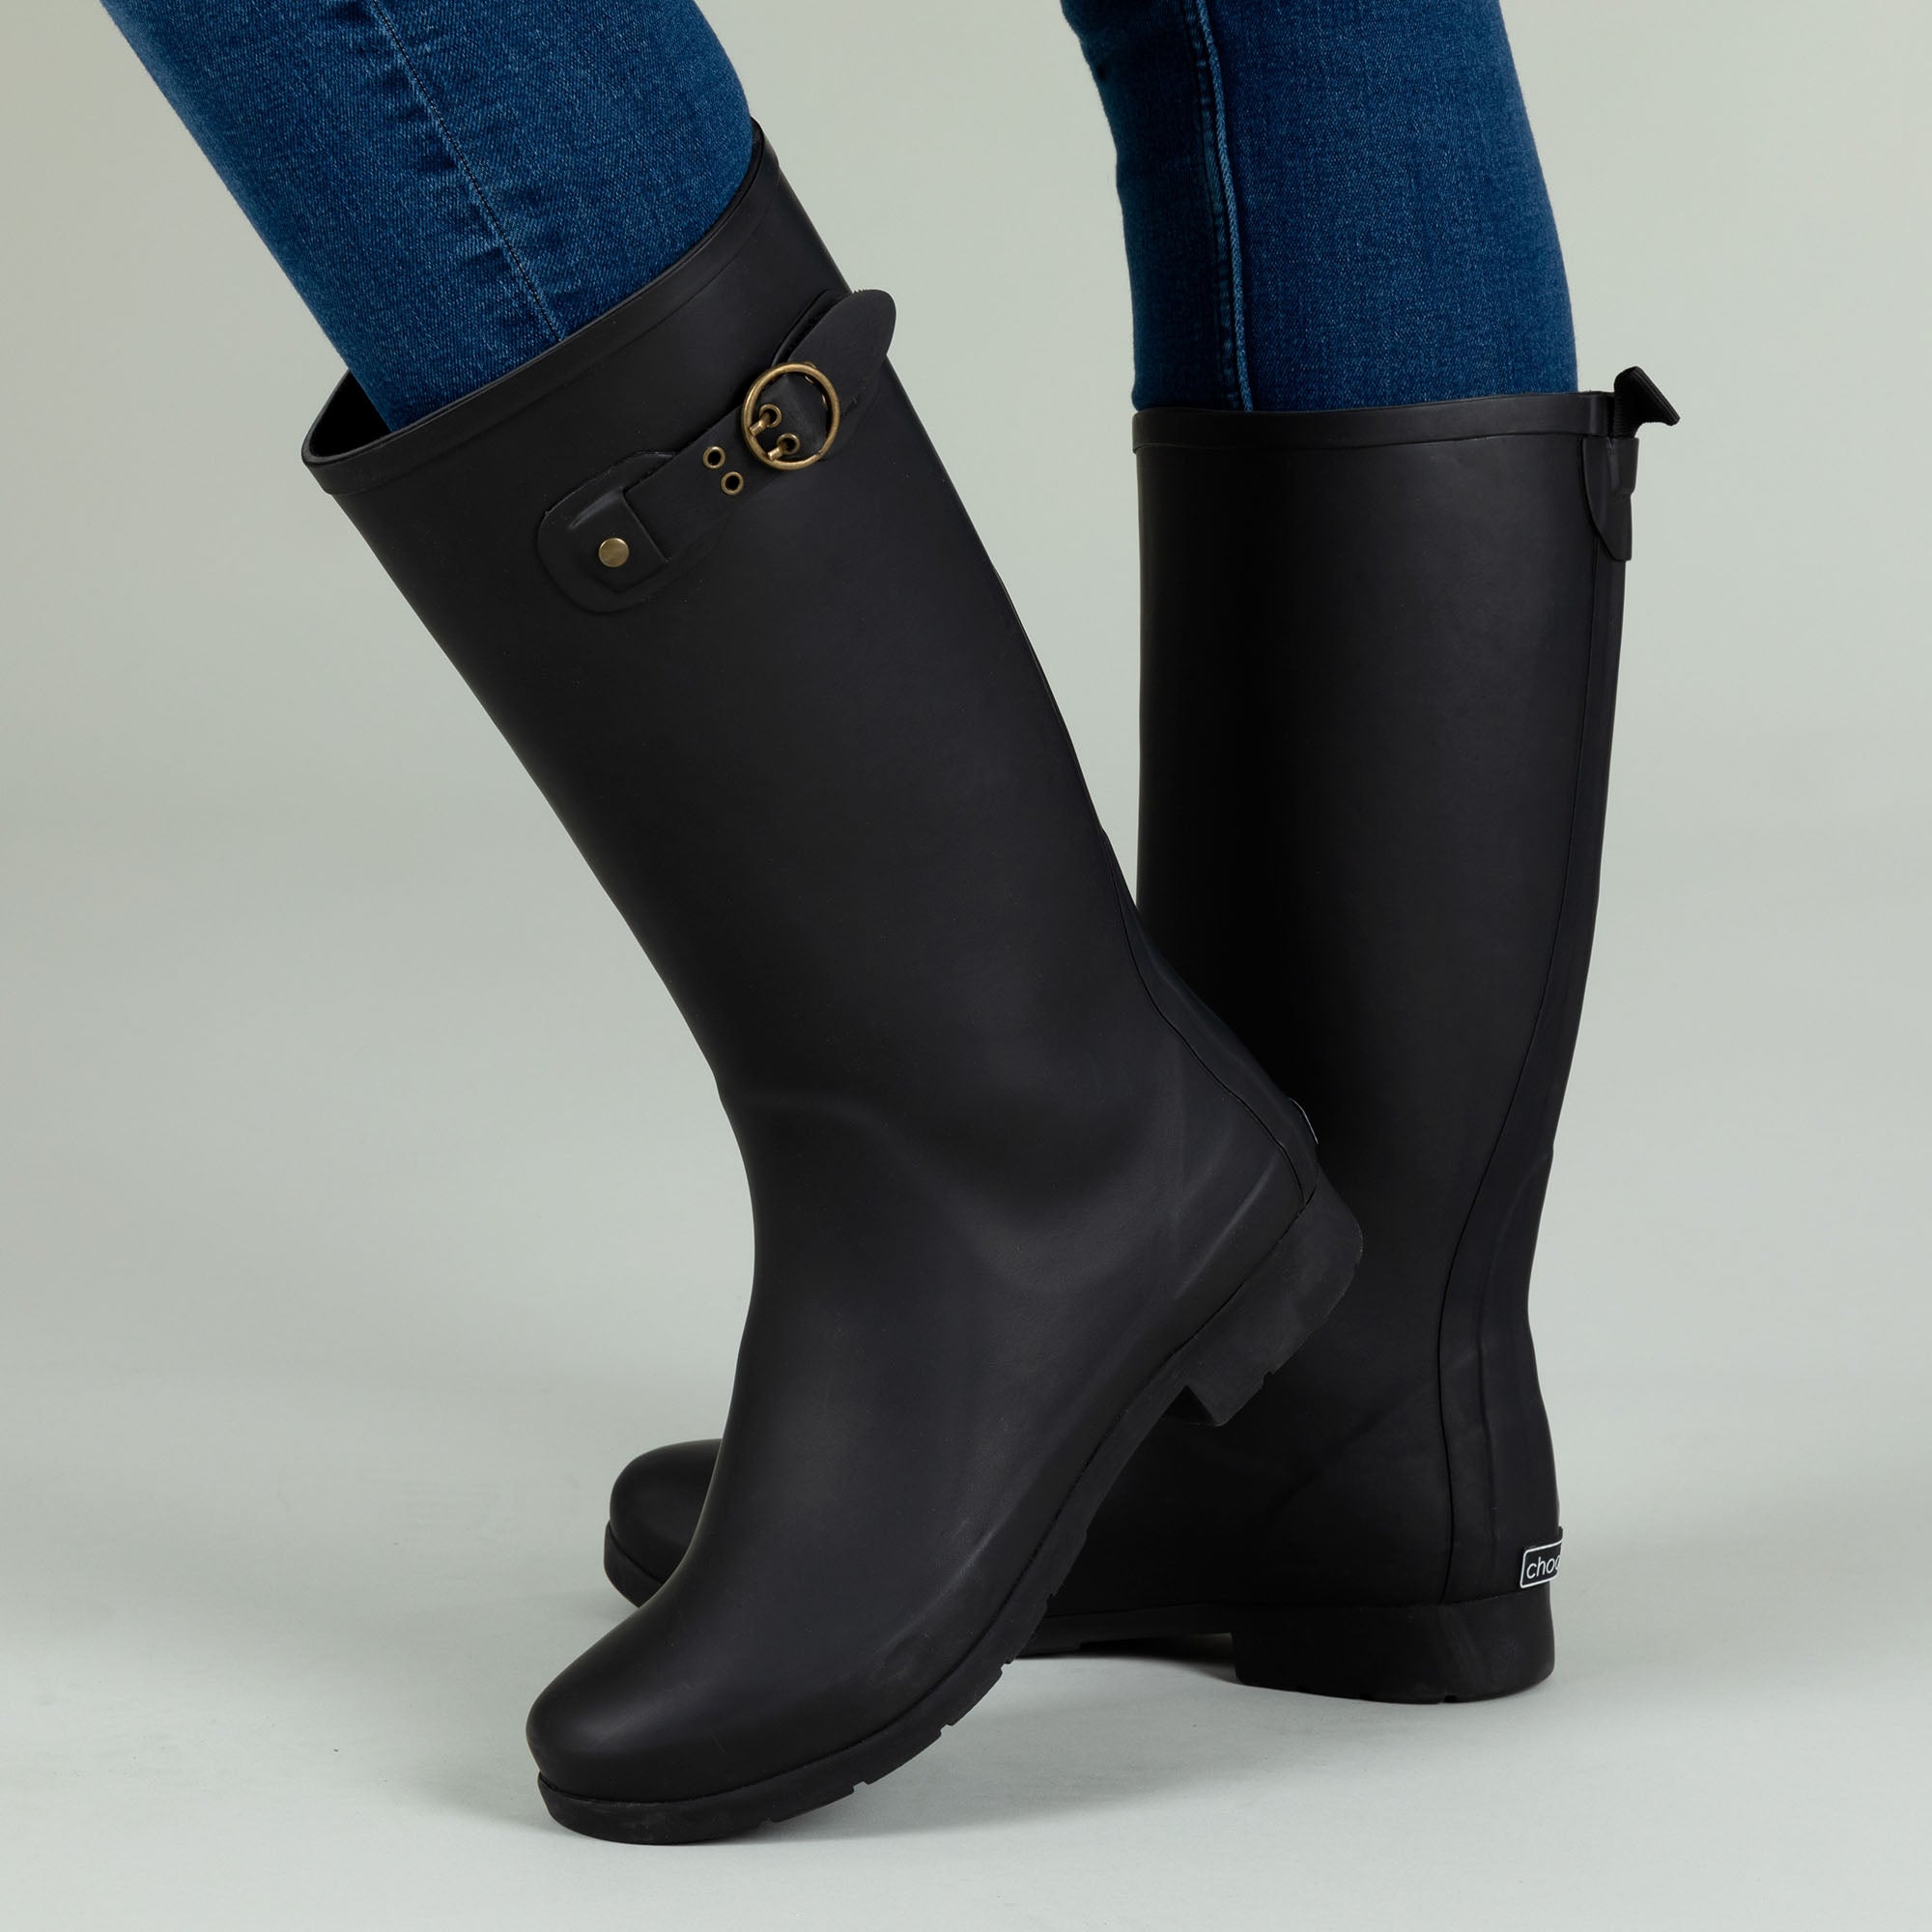 Eastlake Classic Tall Rain Boots - Black - 7